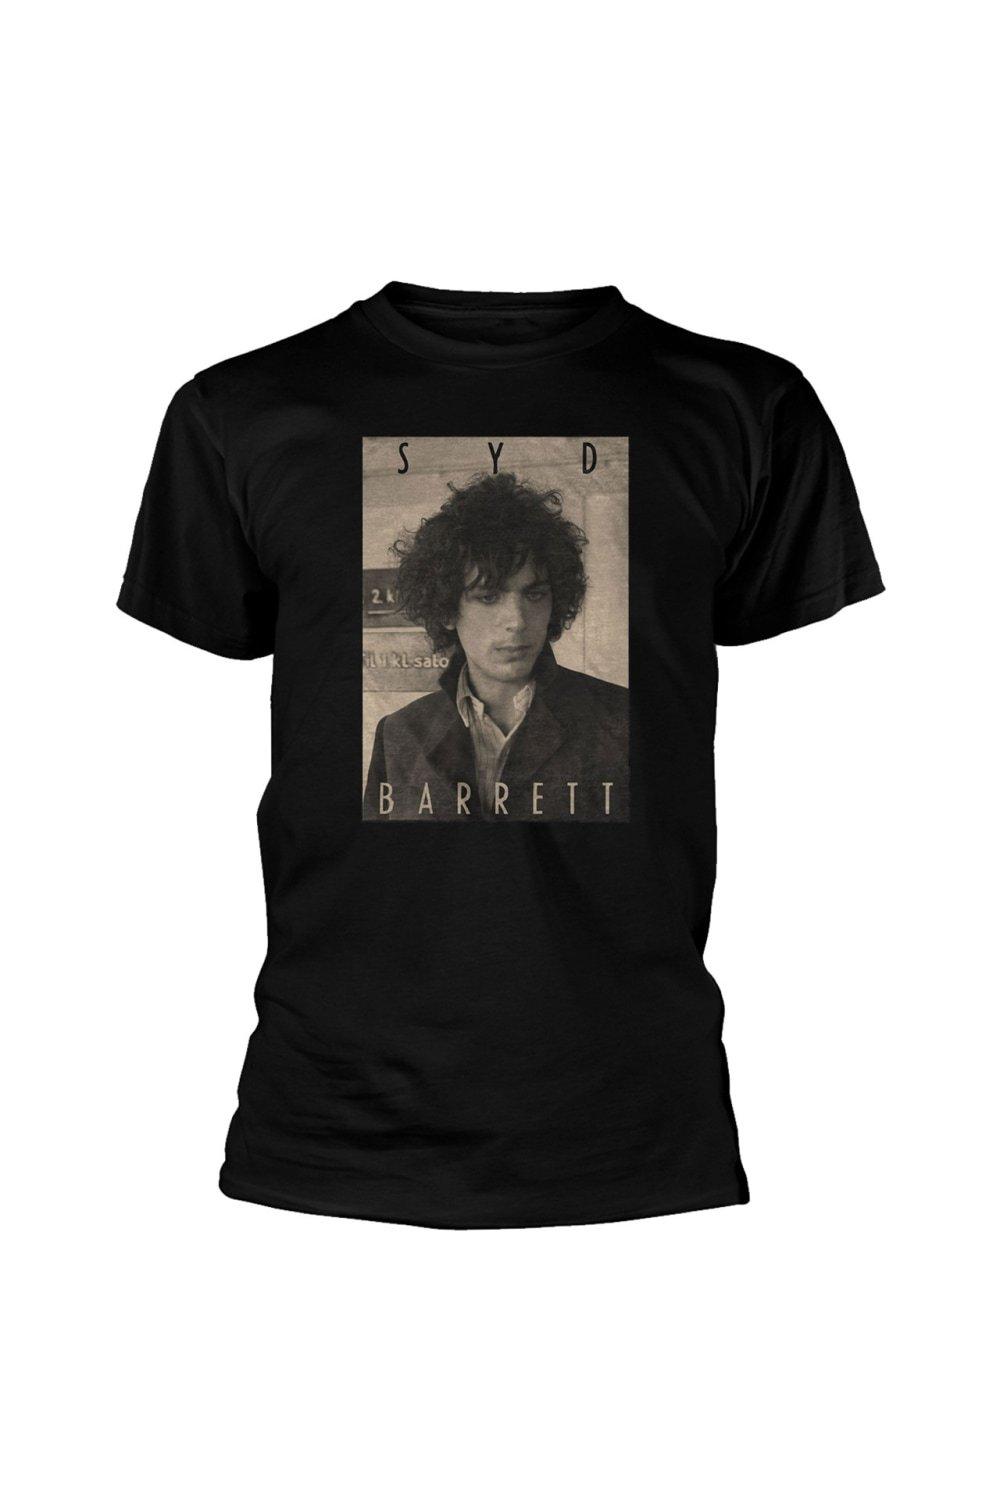 Хлопковая футболка сепия Syd Barrett, черный syd barrett syd barrett an introduction to syd barrett 2 lp